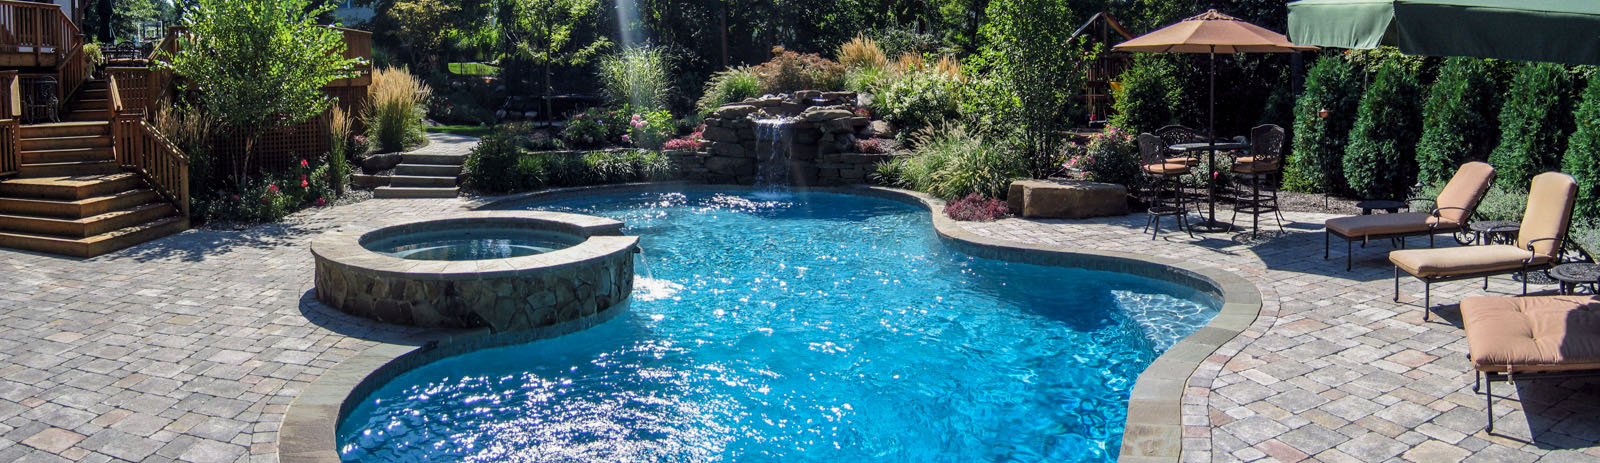 custom swimming pool design in airmont ny, pool waterfall, spa